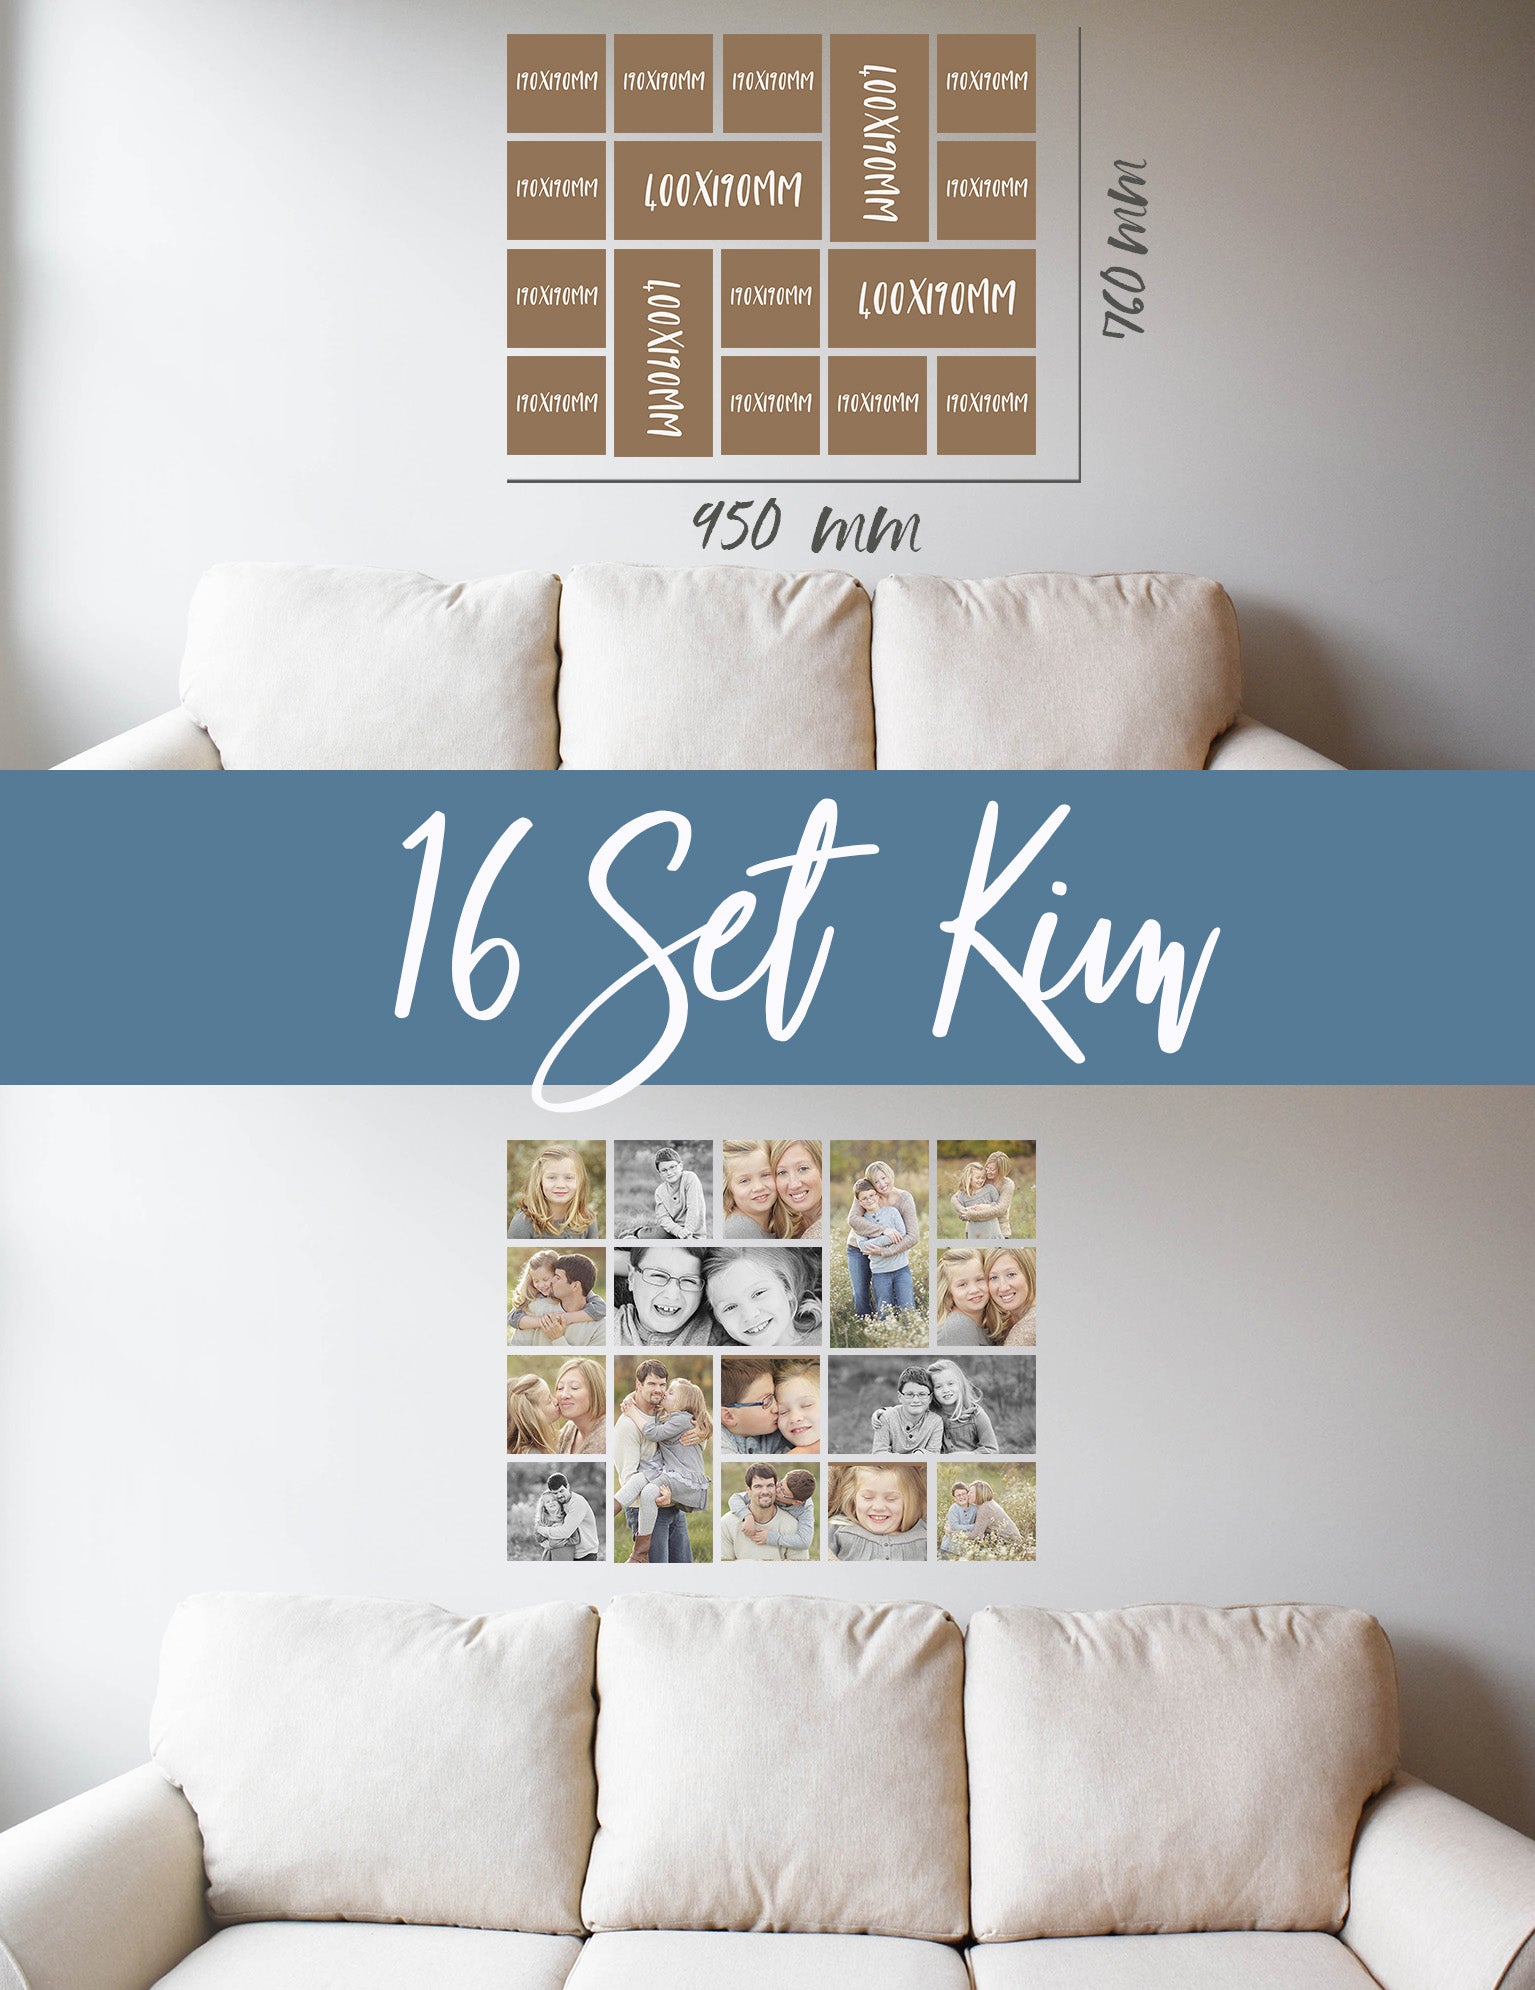 Story Wall Collage | 16 Set | Kim Set